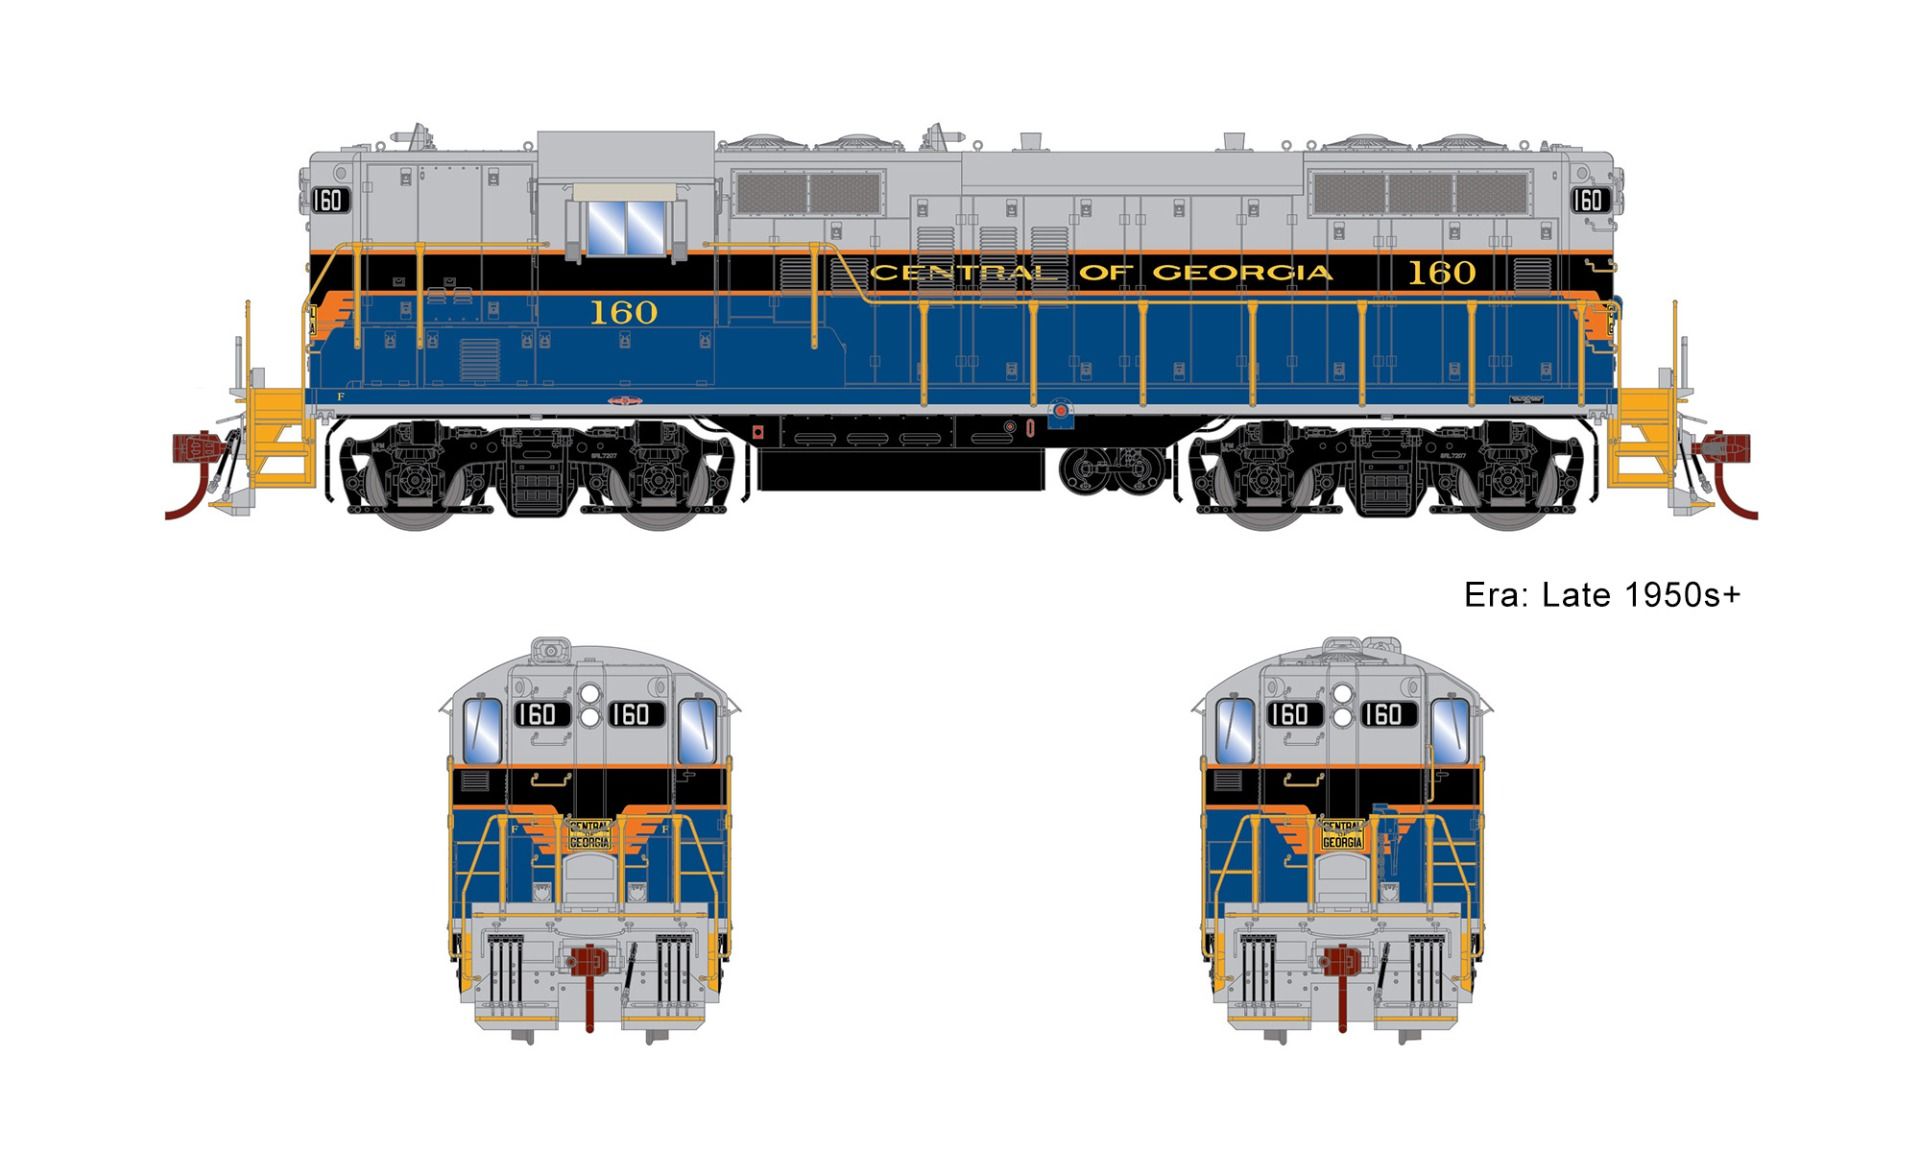 Diesel Model Train Locomotives for Sale Online | Tony's Trains